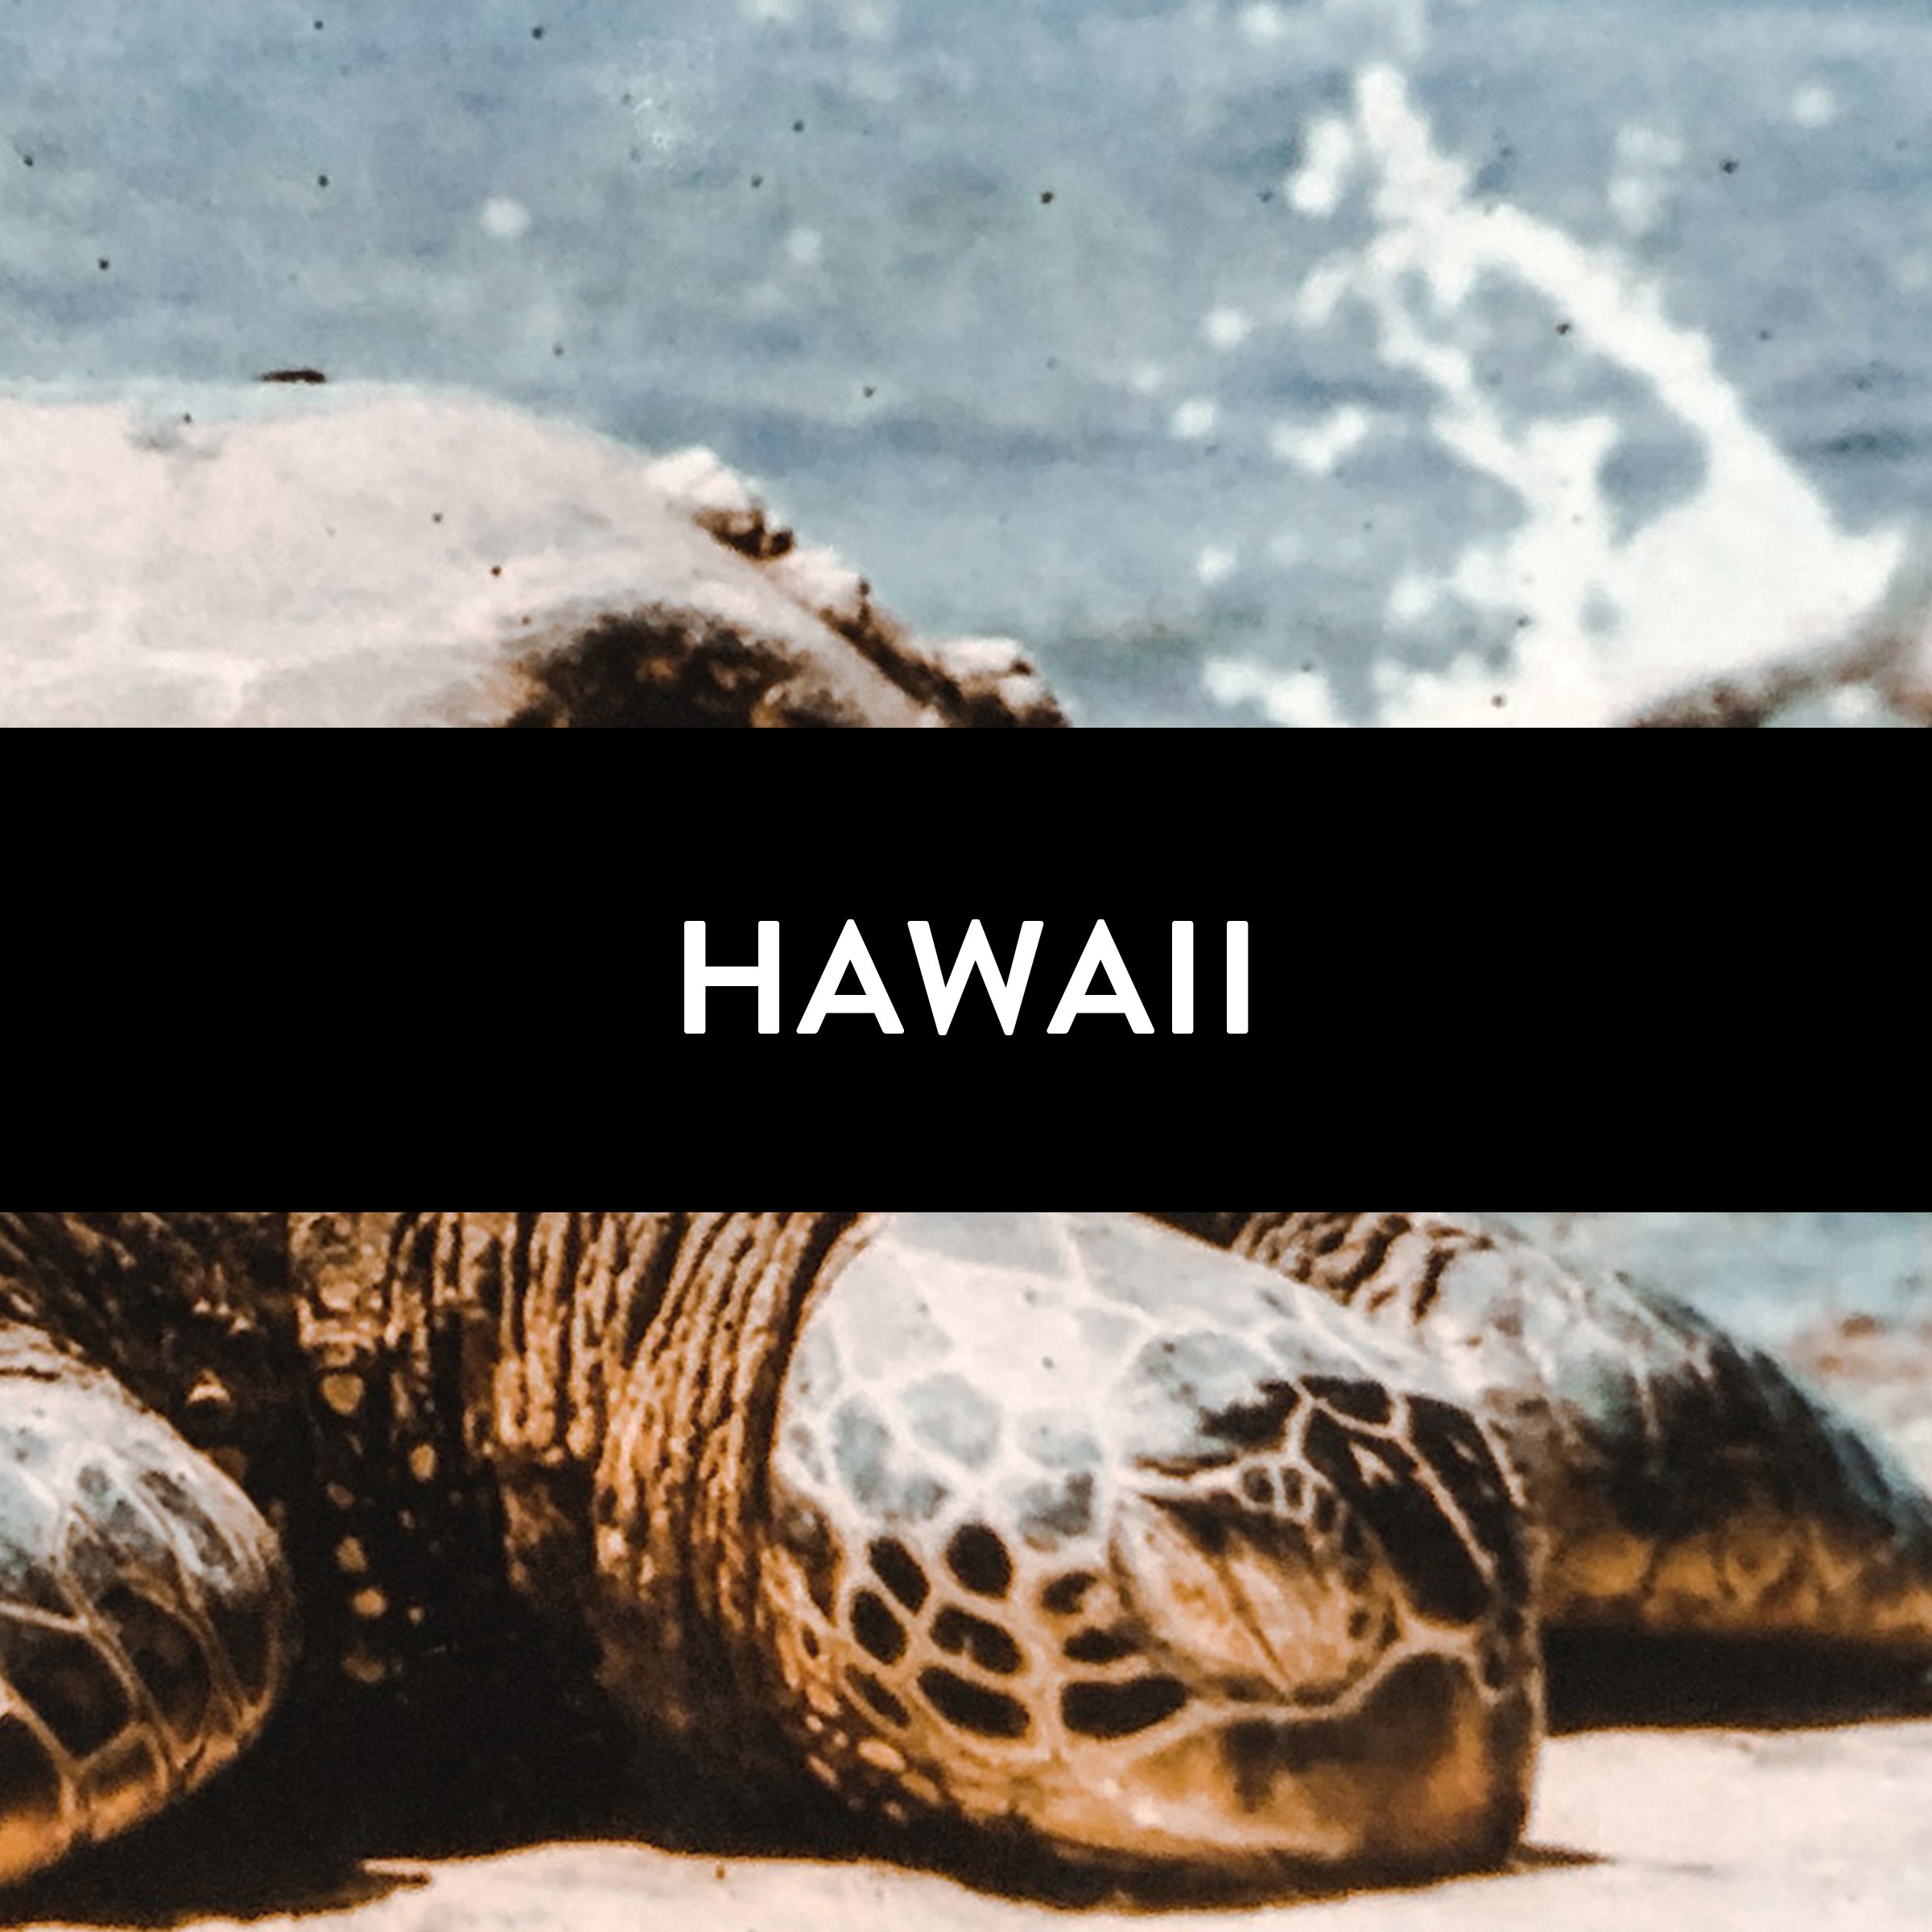 Cover - Hawaii.jpg